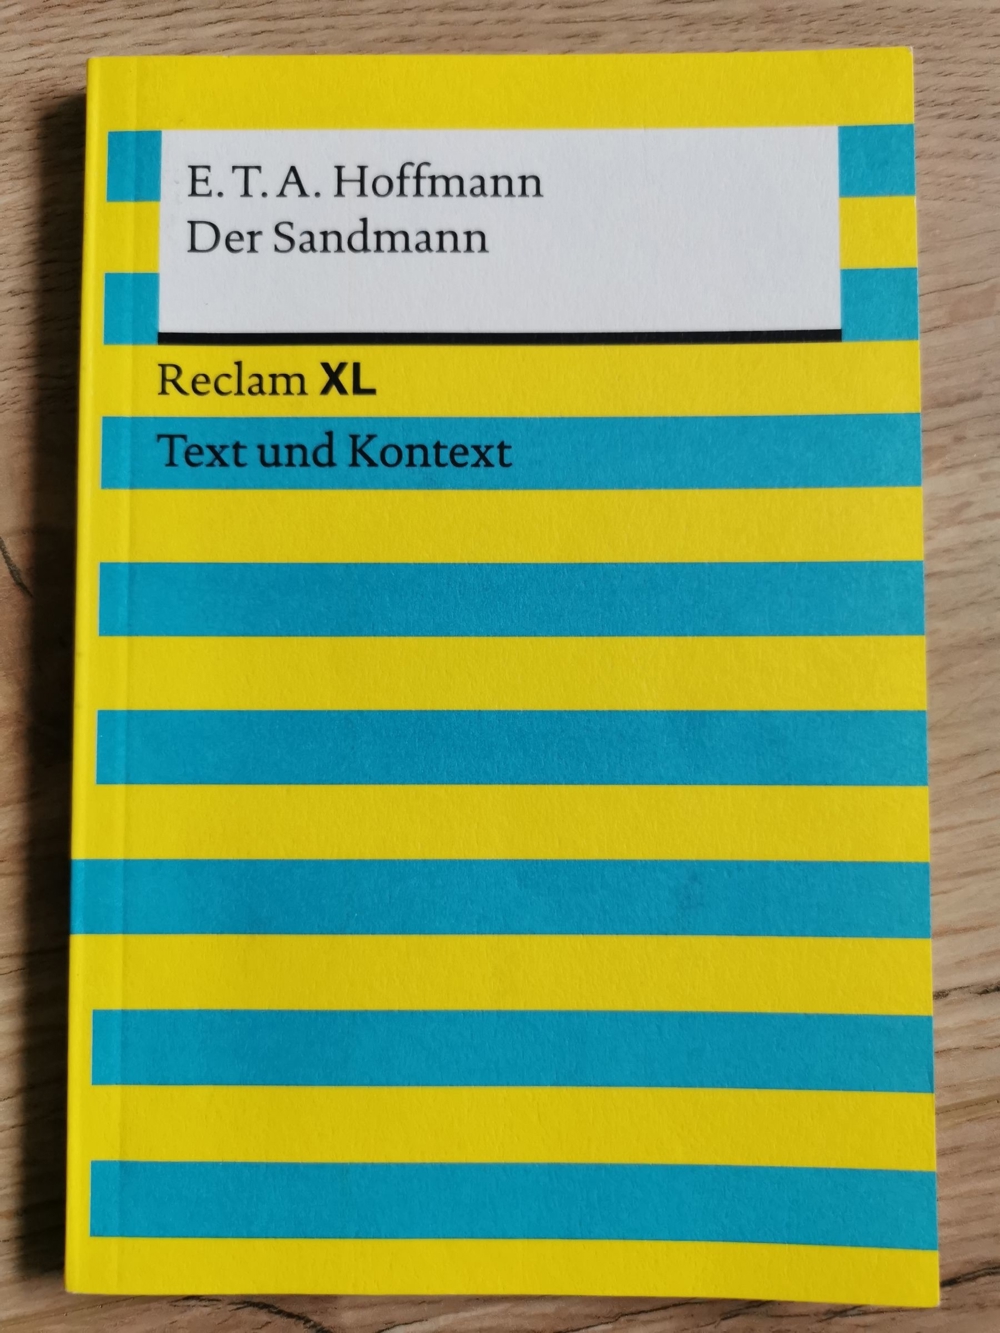 Verkaufe Buch von E.T.A. Hoffmann: Der Sandmann, Taschenbuch, Reclam XL